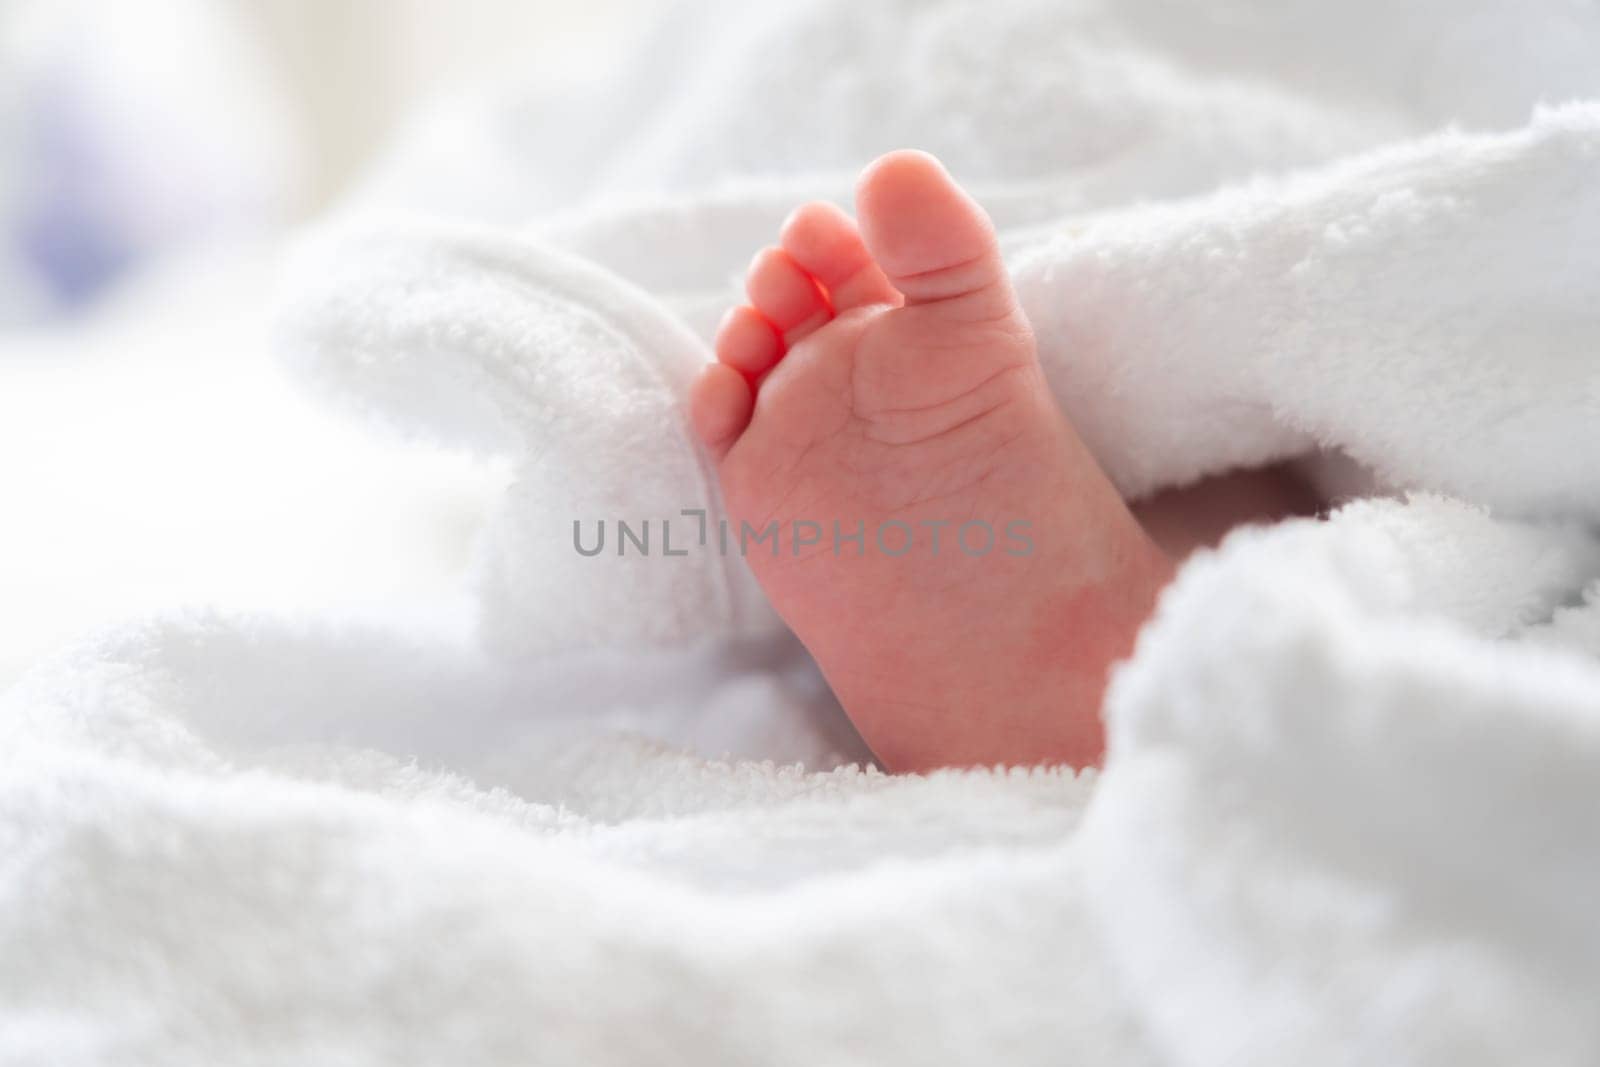 Soft white towel's secret: baby foot peeking post bath by Mariakray